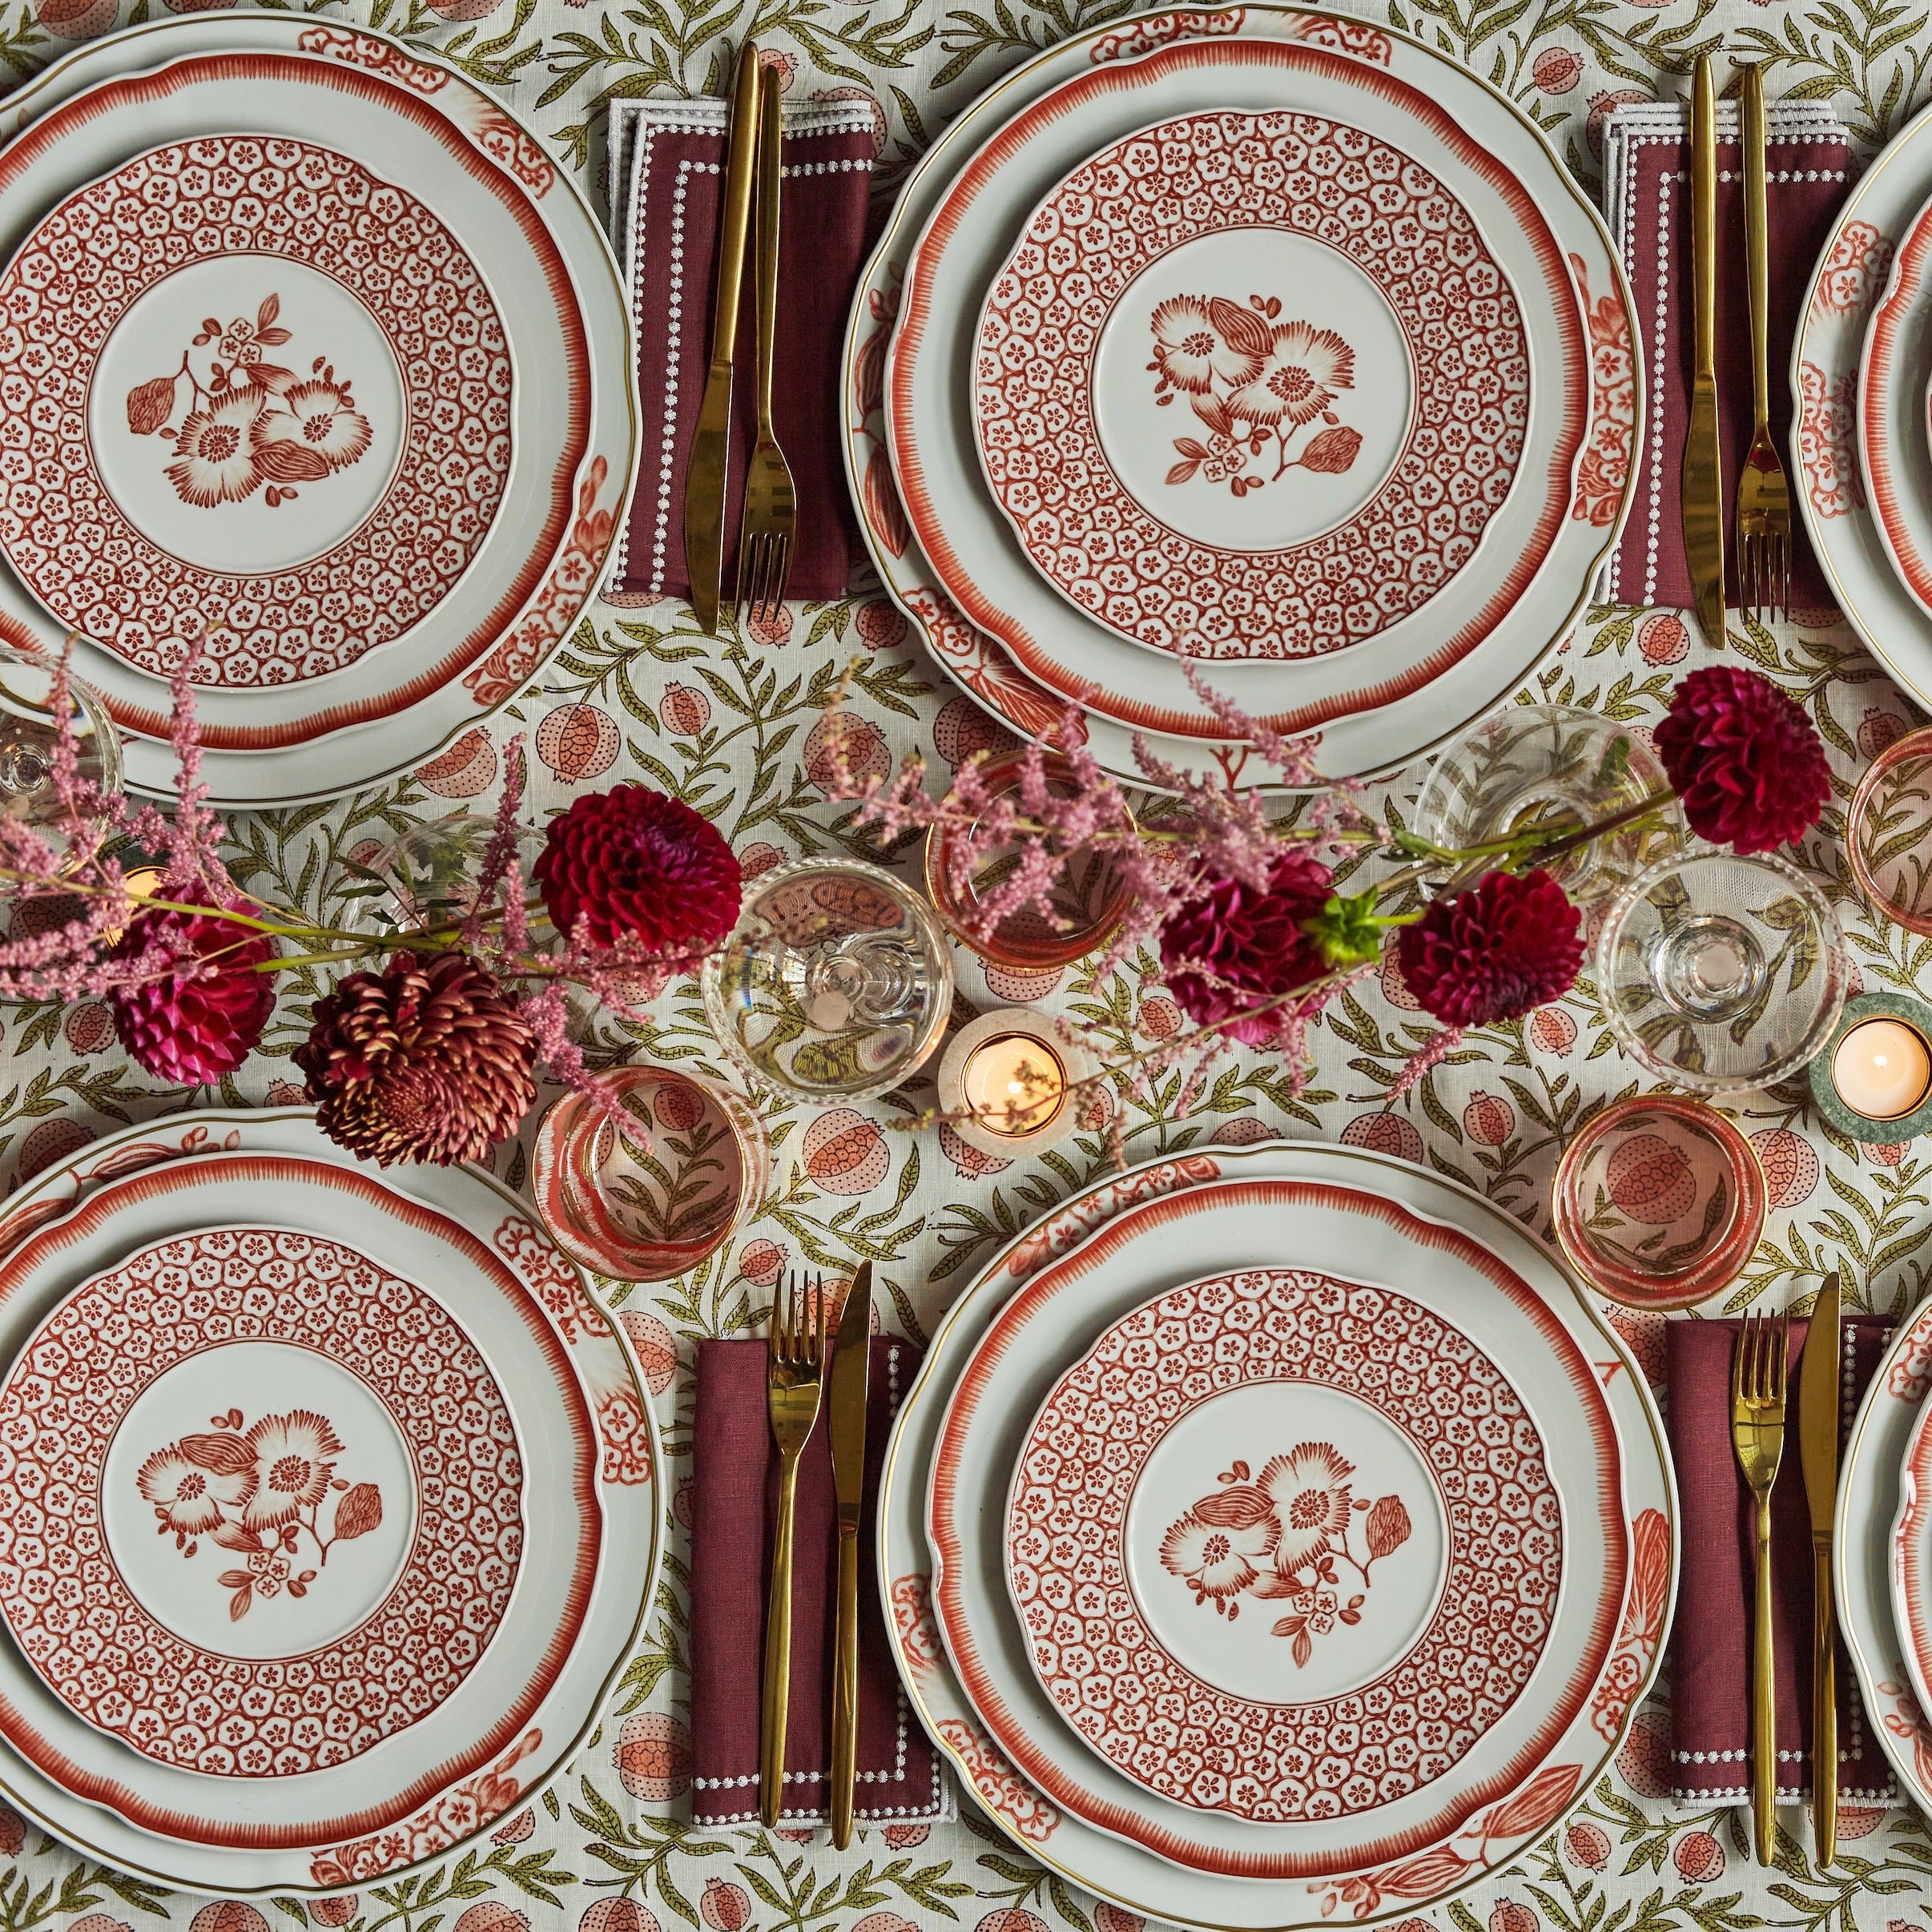 Pink Alana Pomegranate - Tablecloth